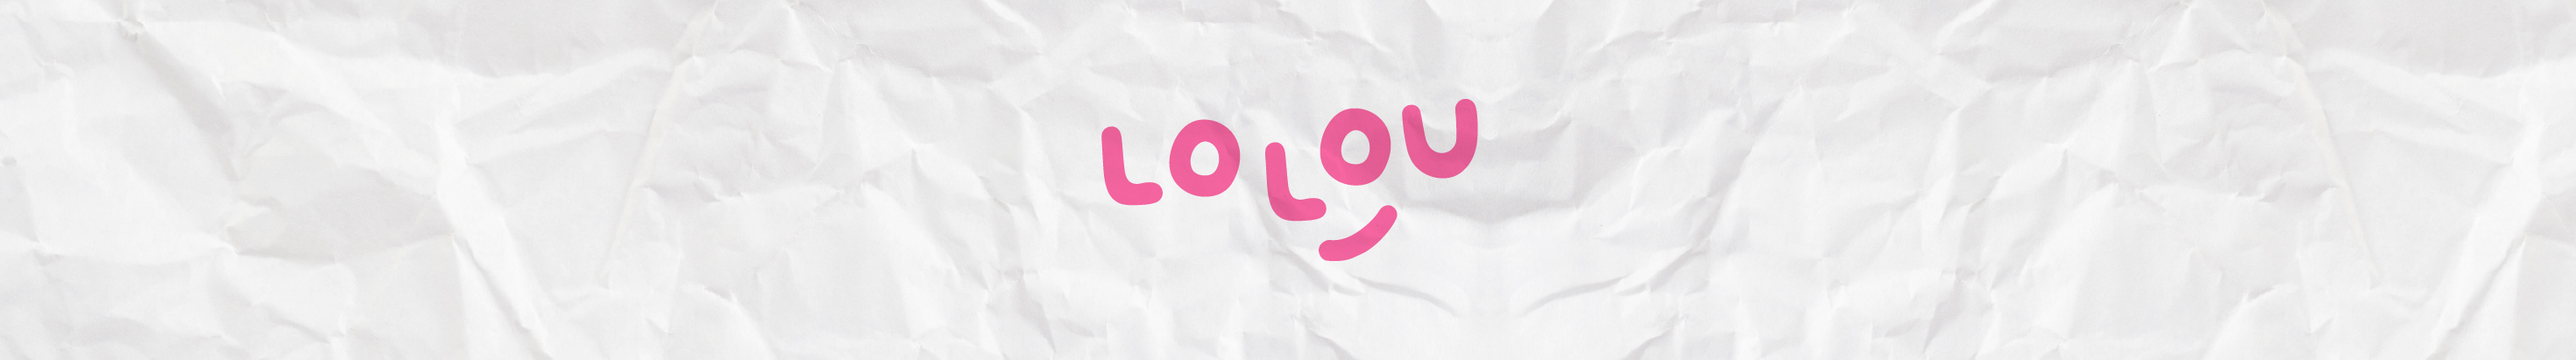 Evangelia Lolou's profile banner